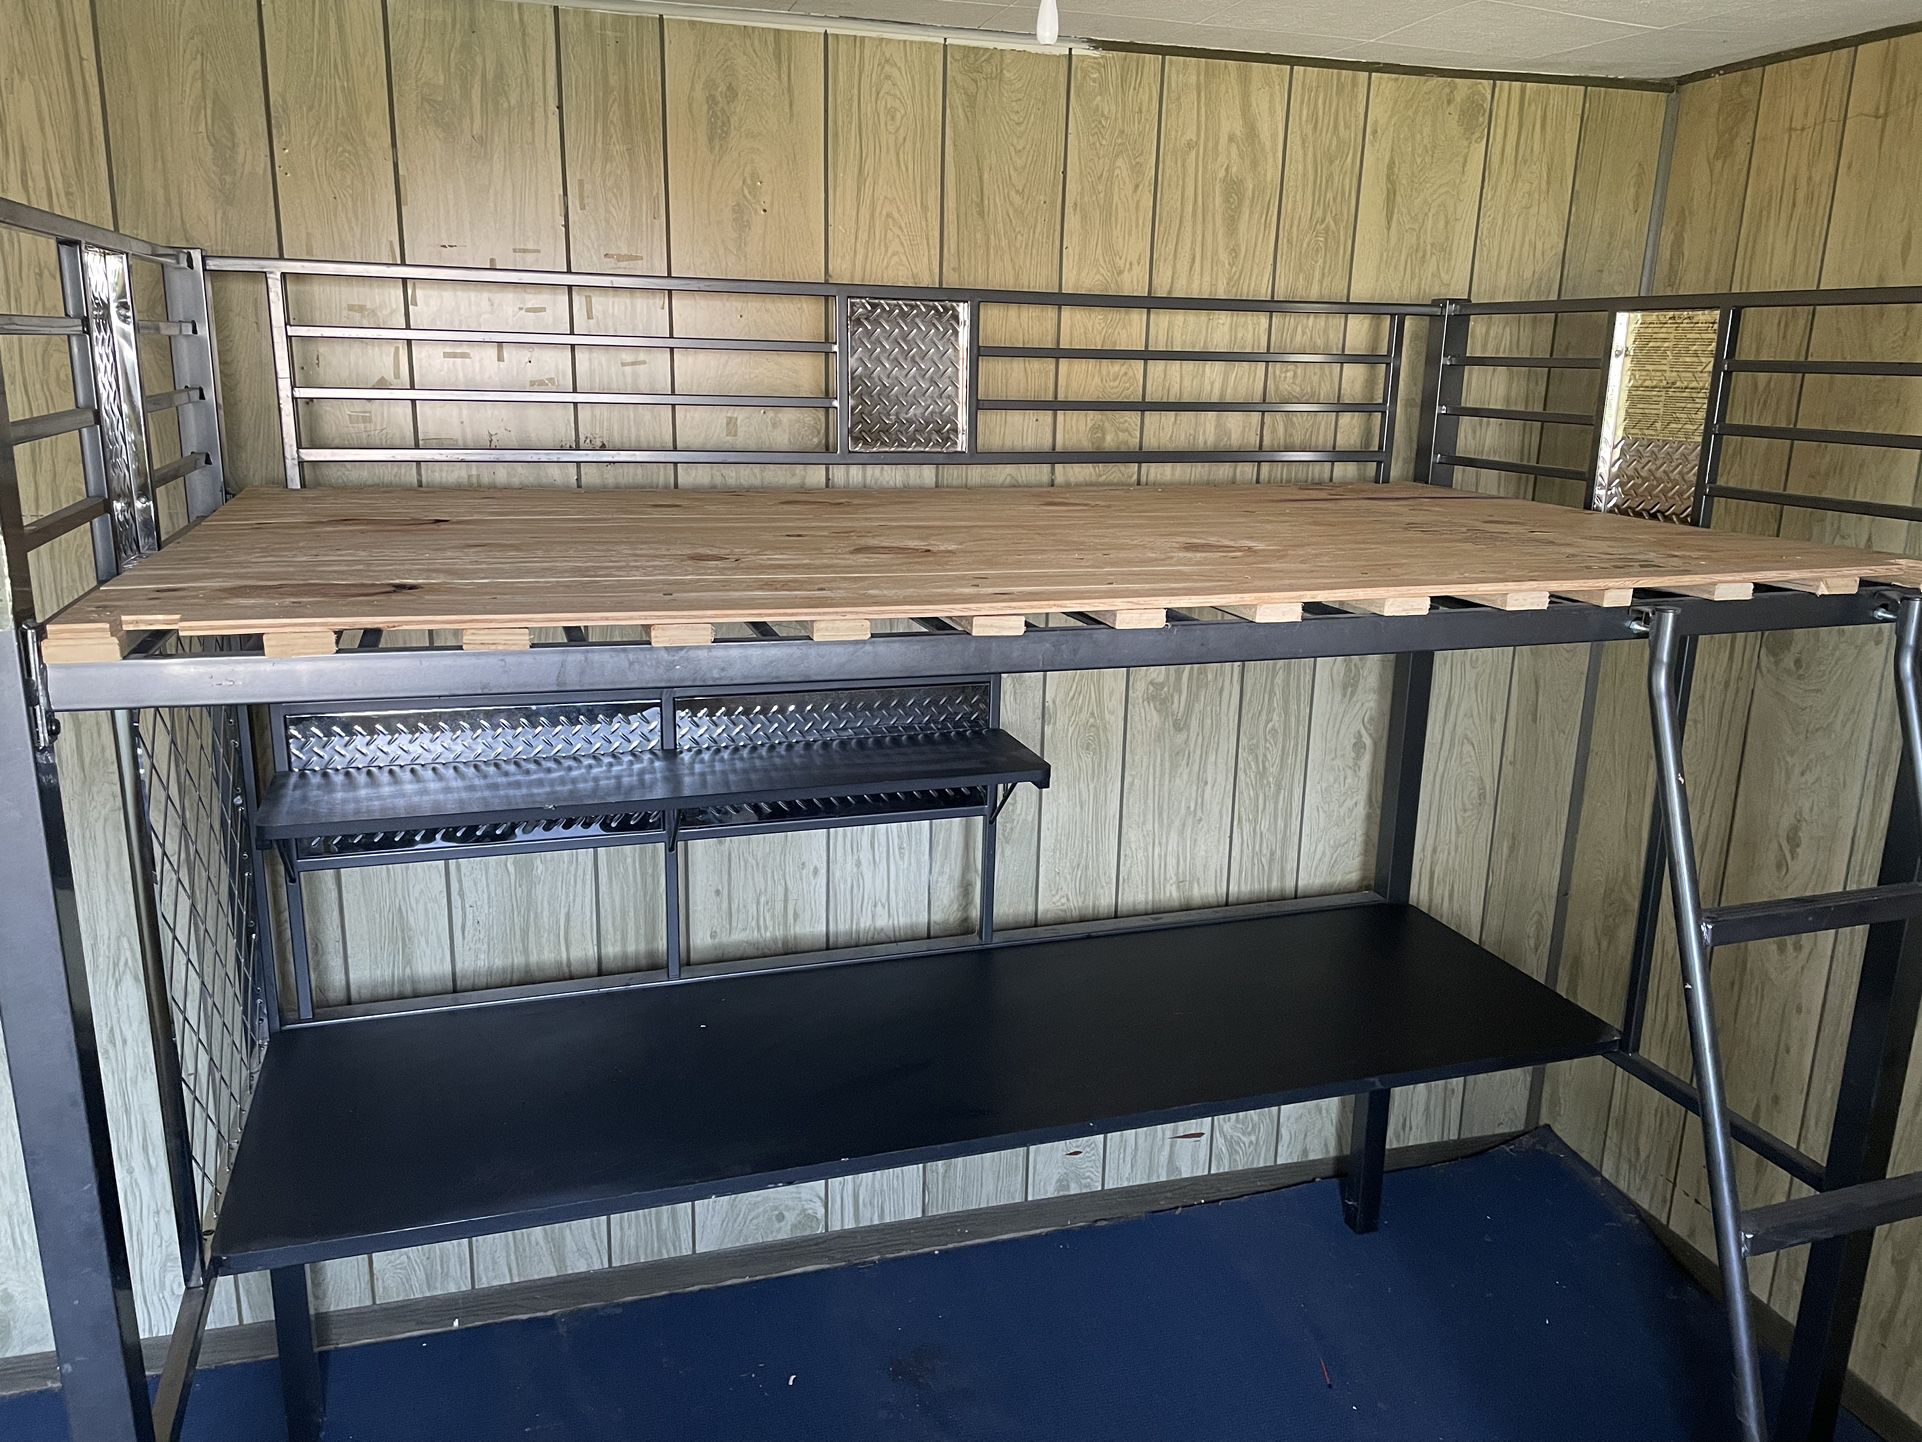 Metal Loft bunk Bed